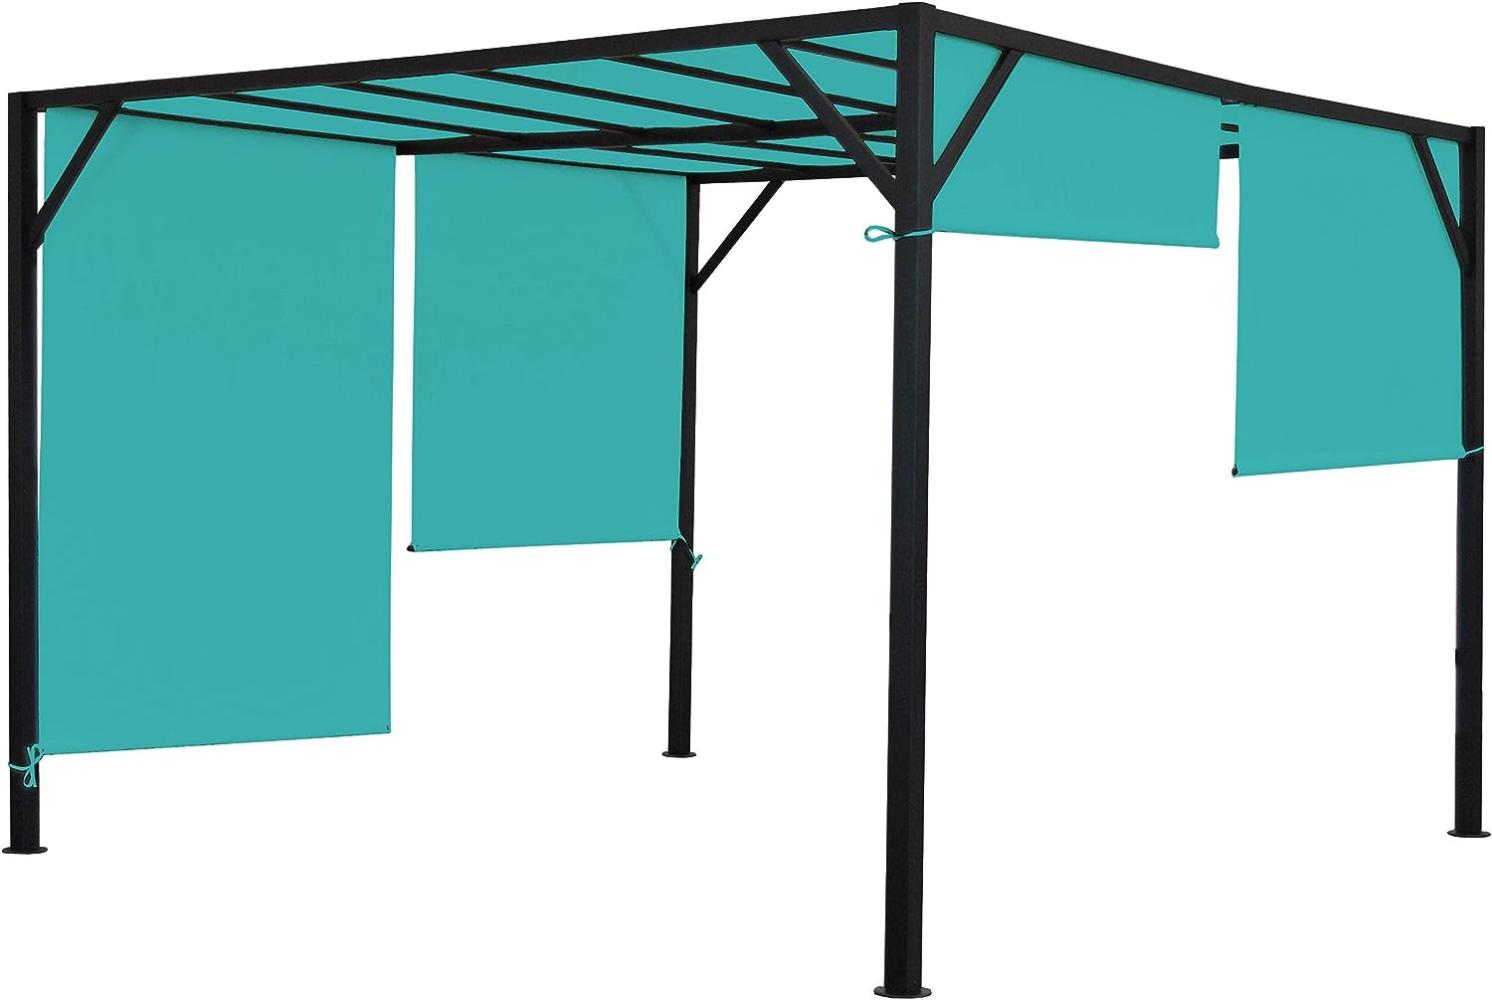 Pergola Baia, Garten Pavillon Terrassenüberdachung, stabiles 6cm-Stahl-Gestell + Schiebedach türkis-blau ~ 4x4m Bild 1